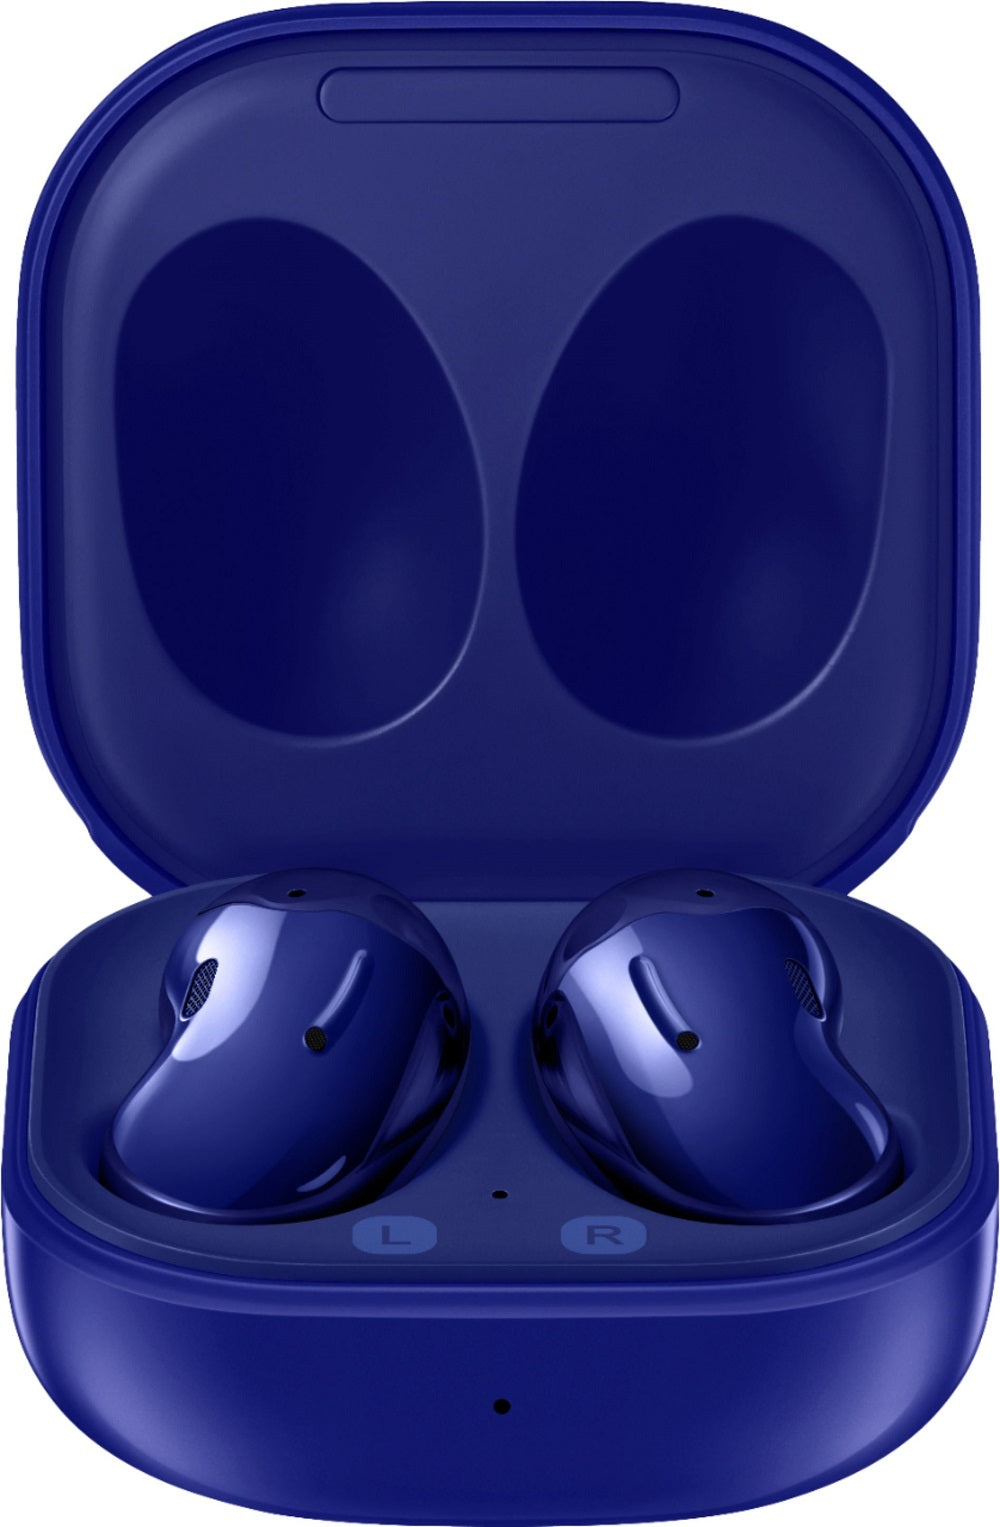 Samsung Galaxy Buds Live True Wireless Earbud Headphones - Mystic Blue (Certified Refurbished)